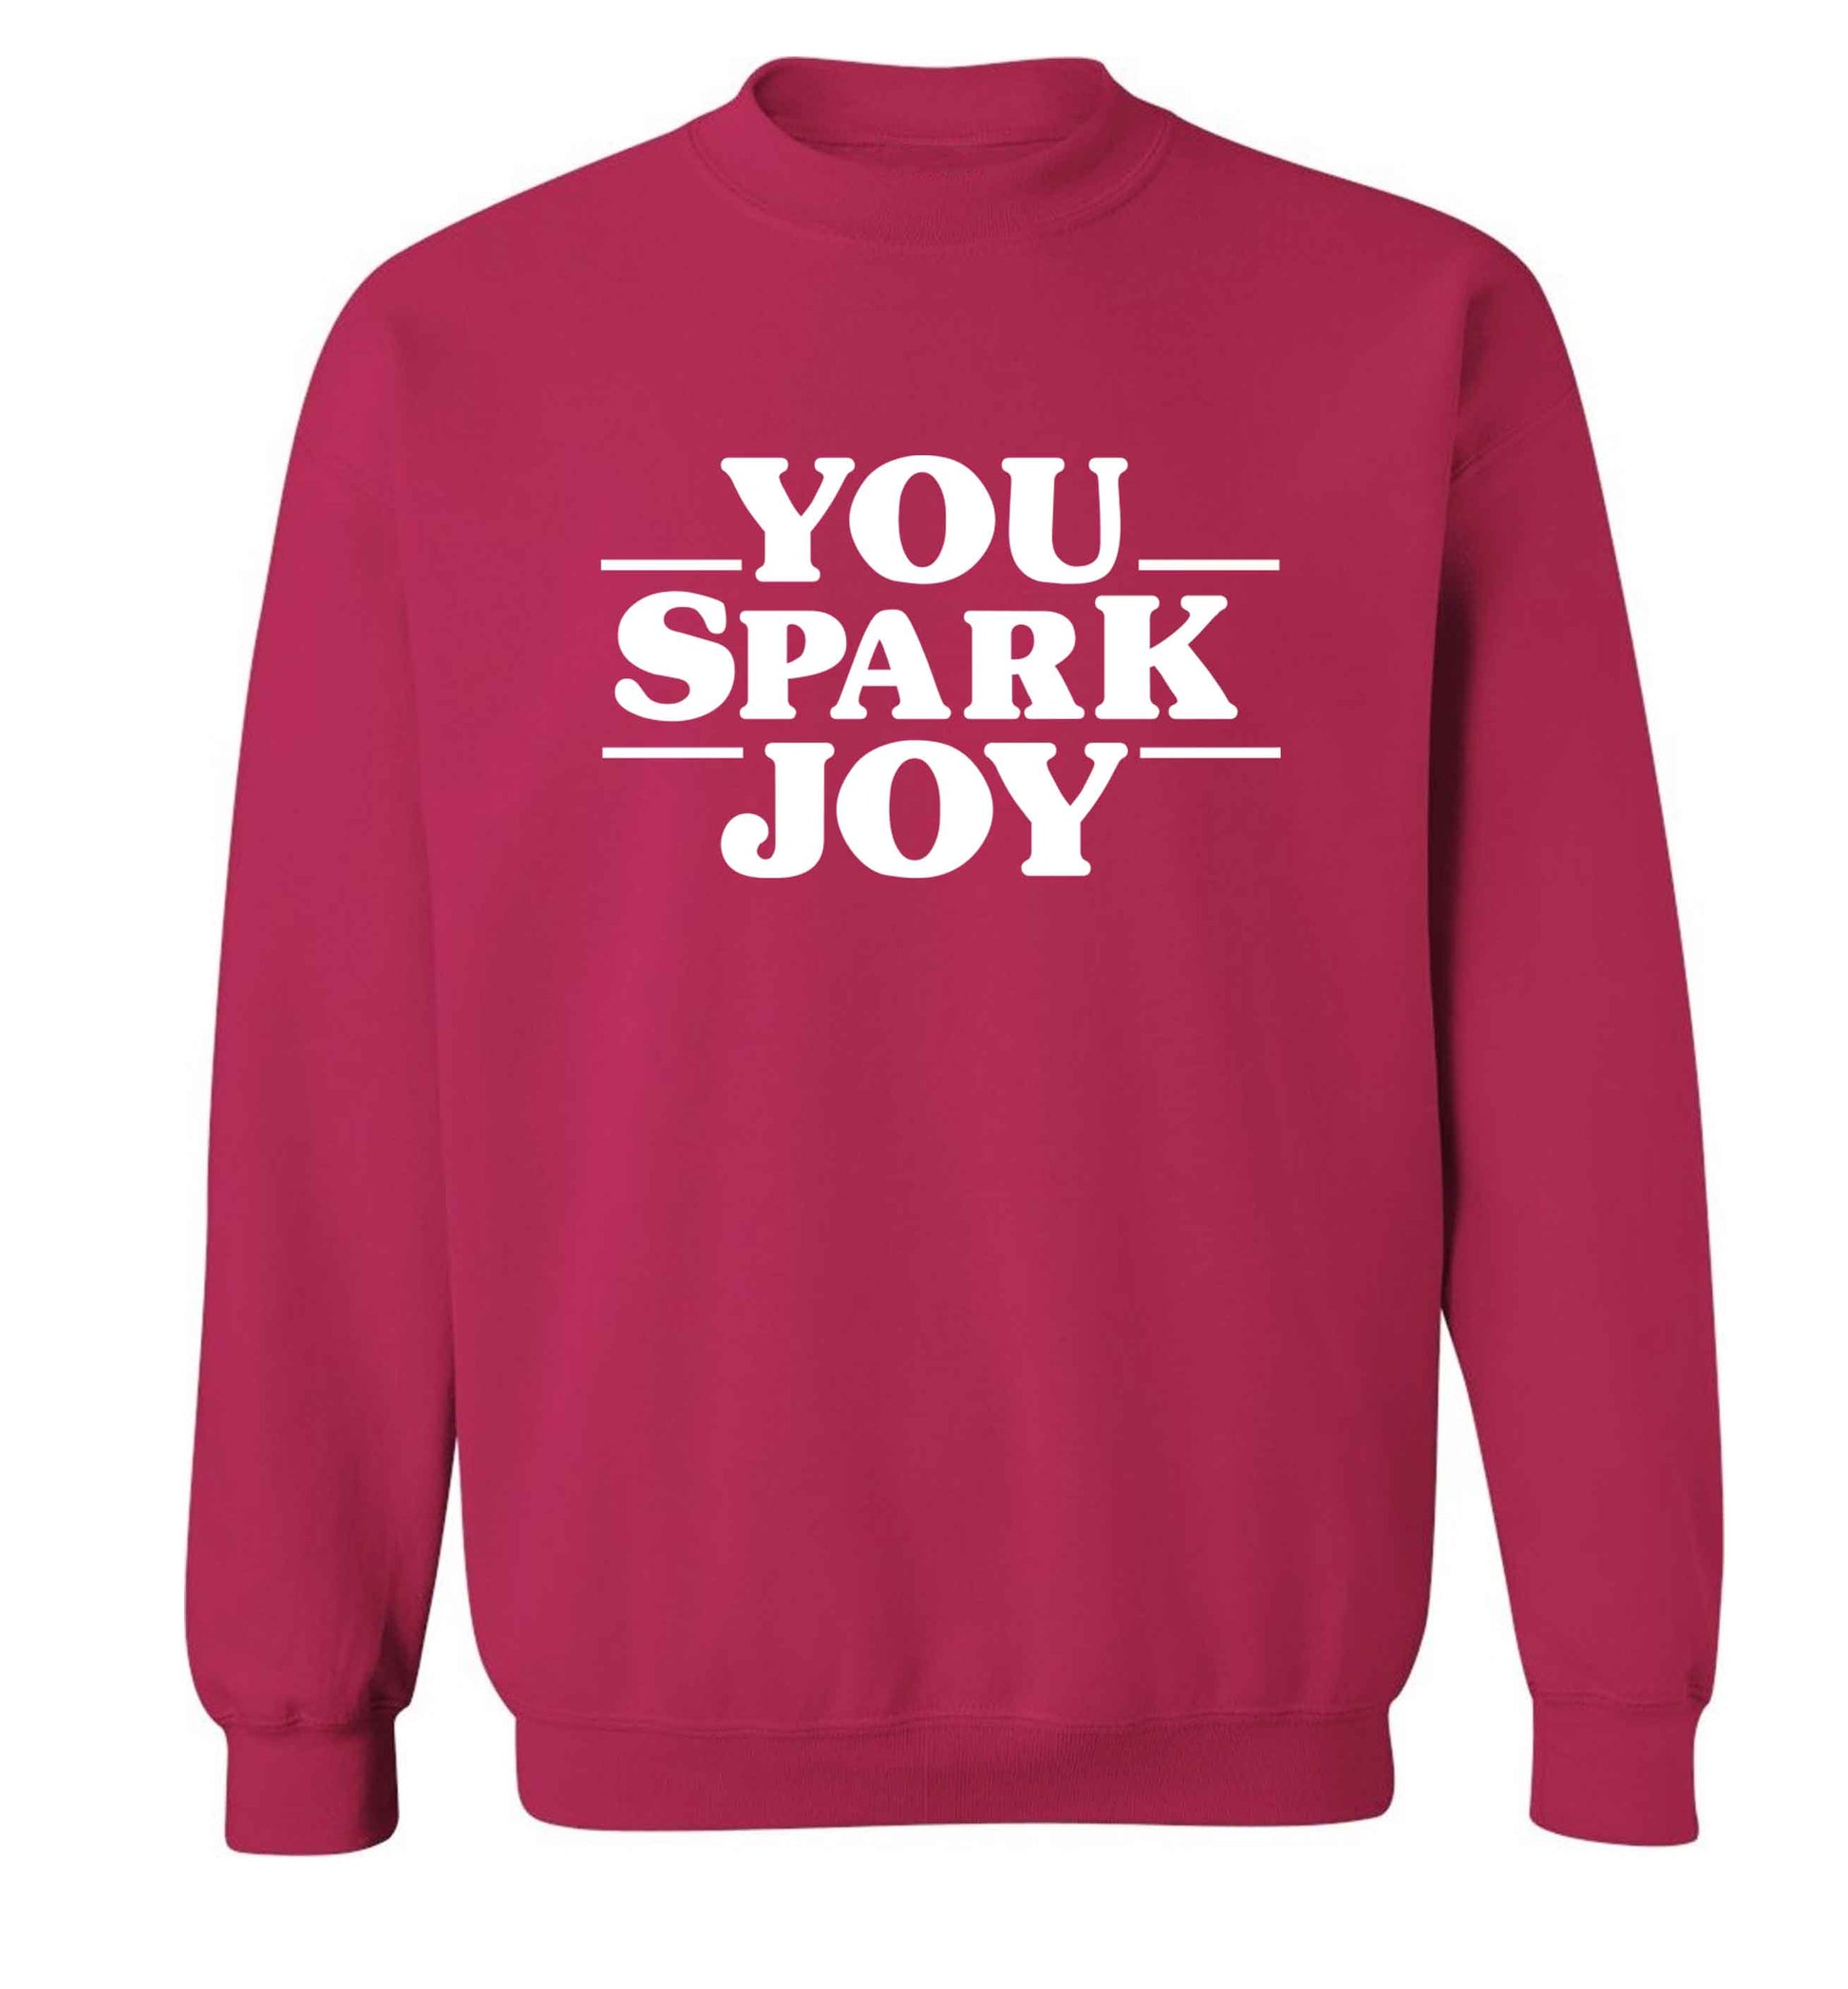 You spark joy adult's unisex pink sweater 2XL